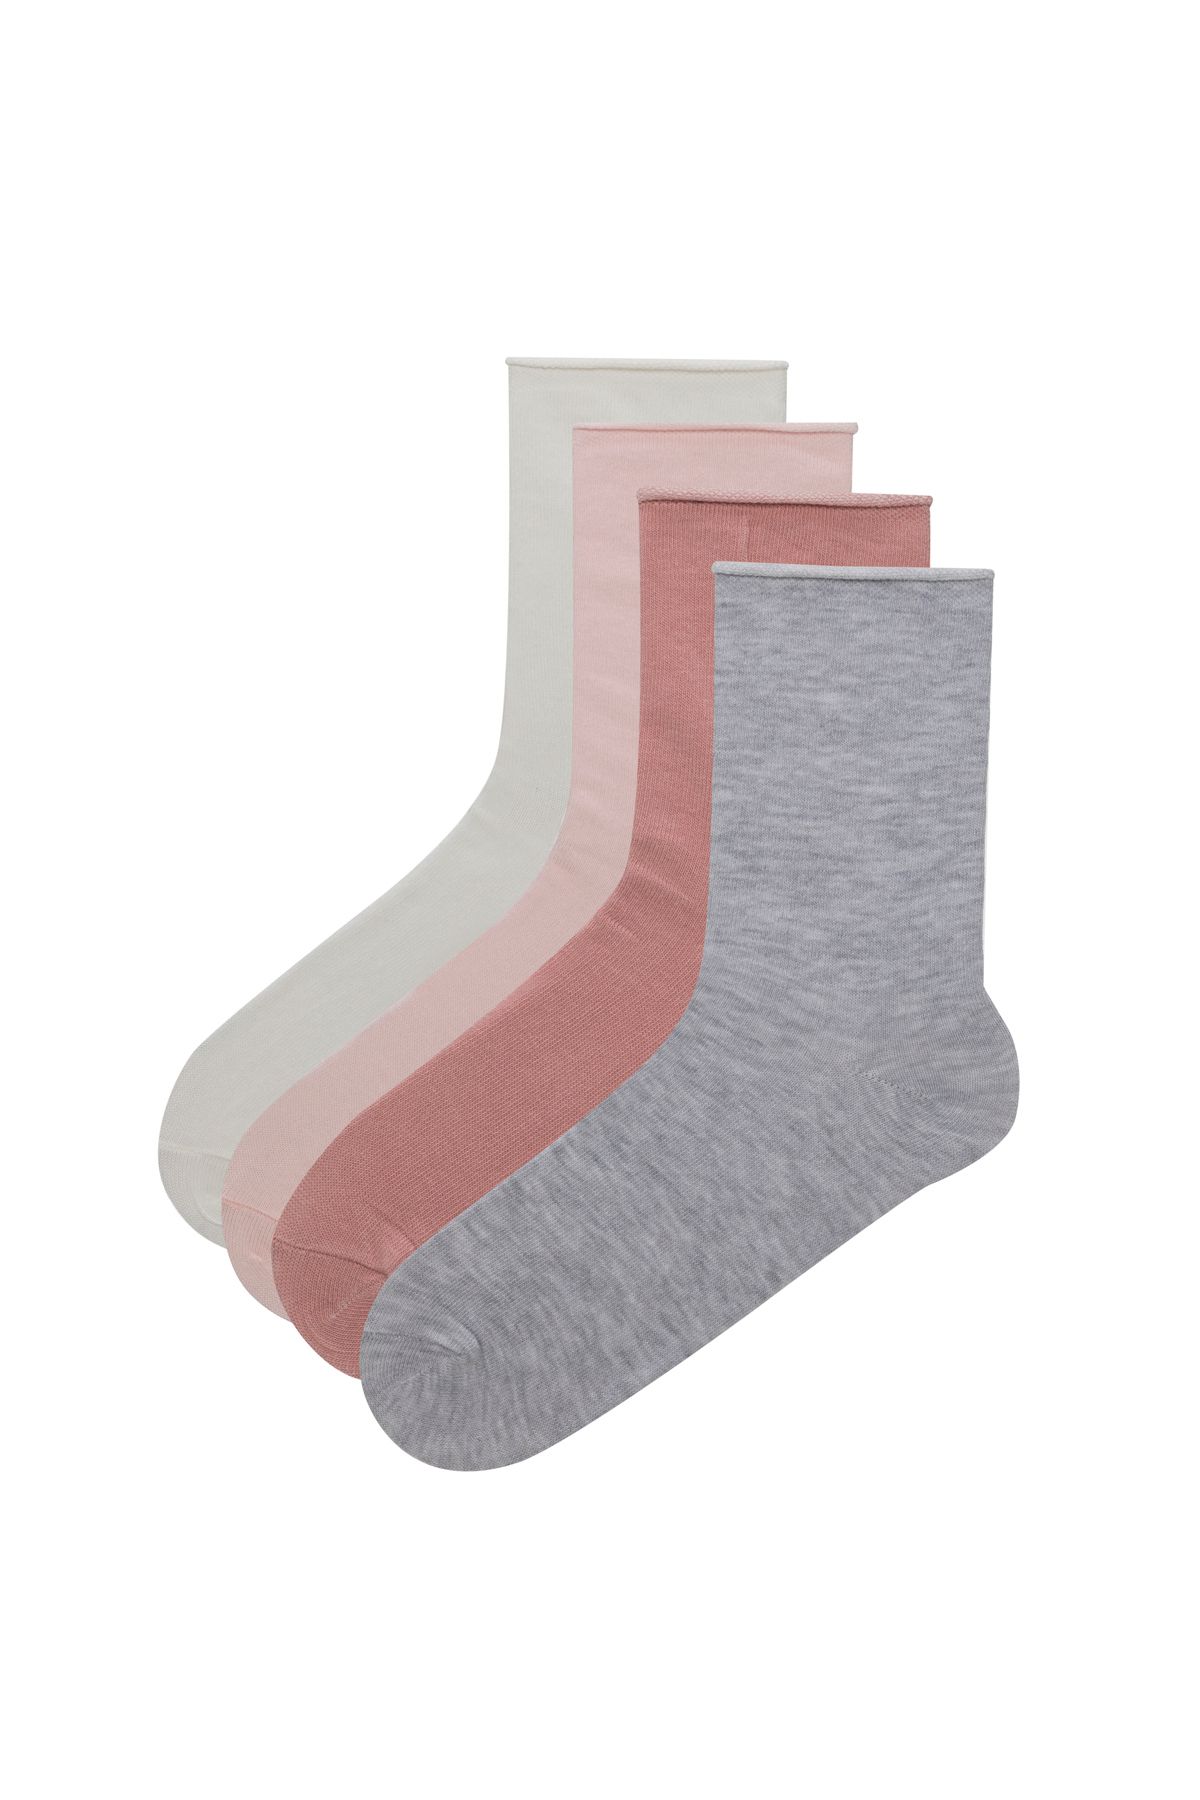 Penti Pembe - Çok Renkli 4'lü Soket Çorap